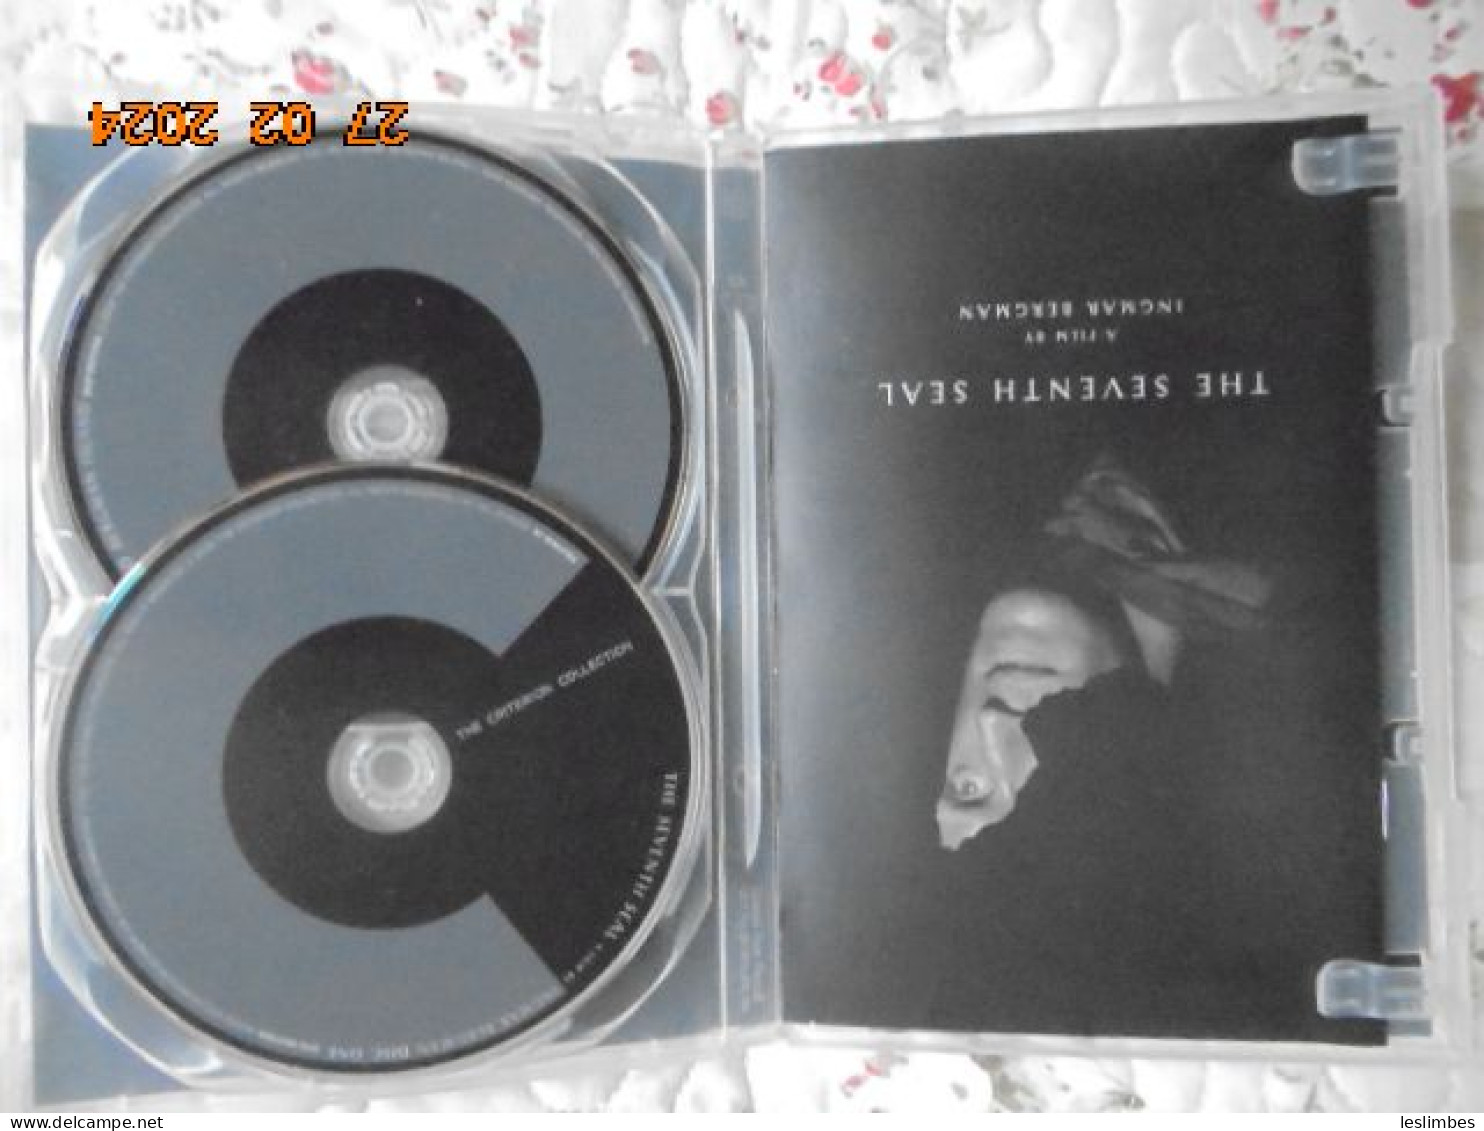 Seventh Seal (The Criterion Collection) -  [DVD] [Region 1] [US Import] [NTSC] Ingmar Bergman - Classici